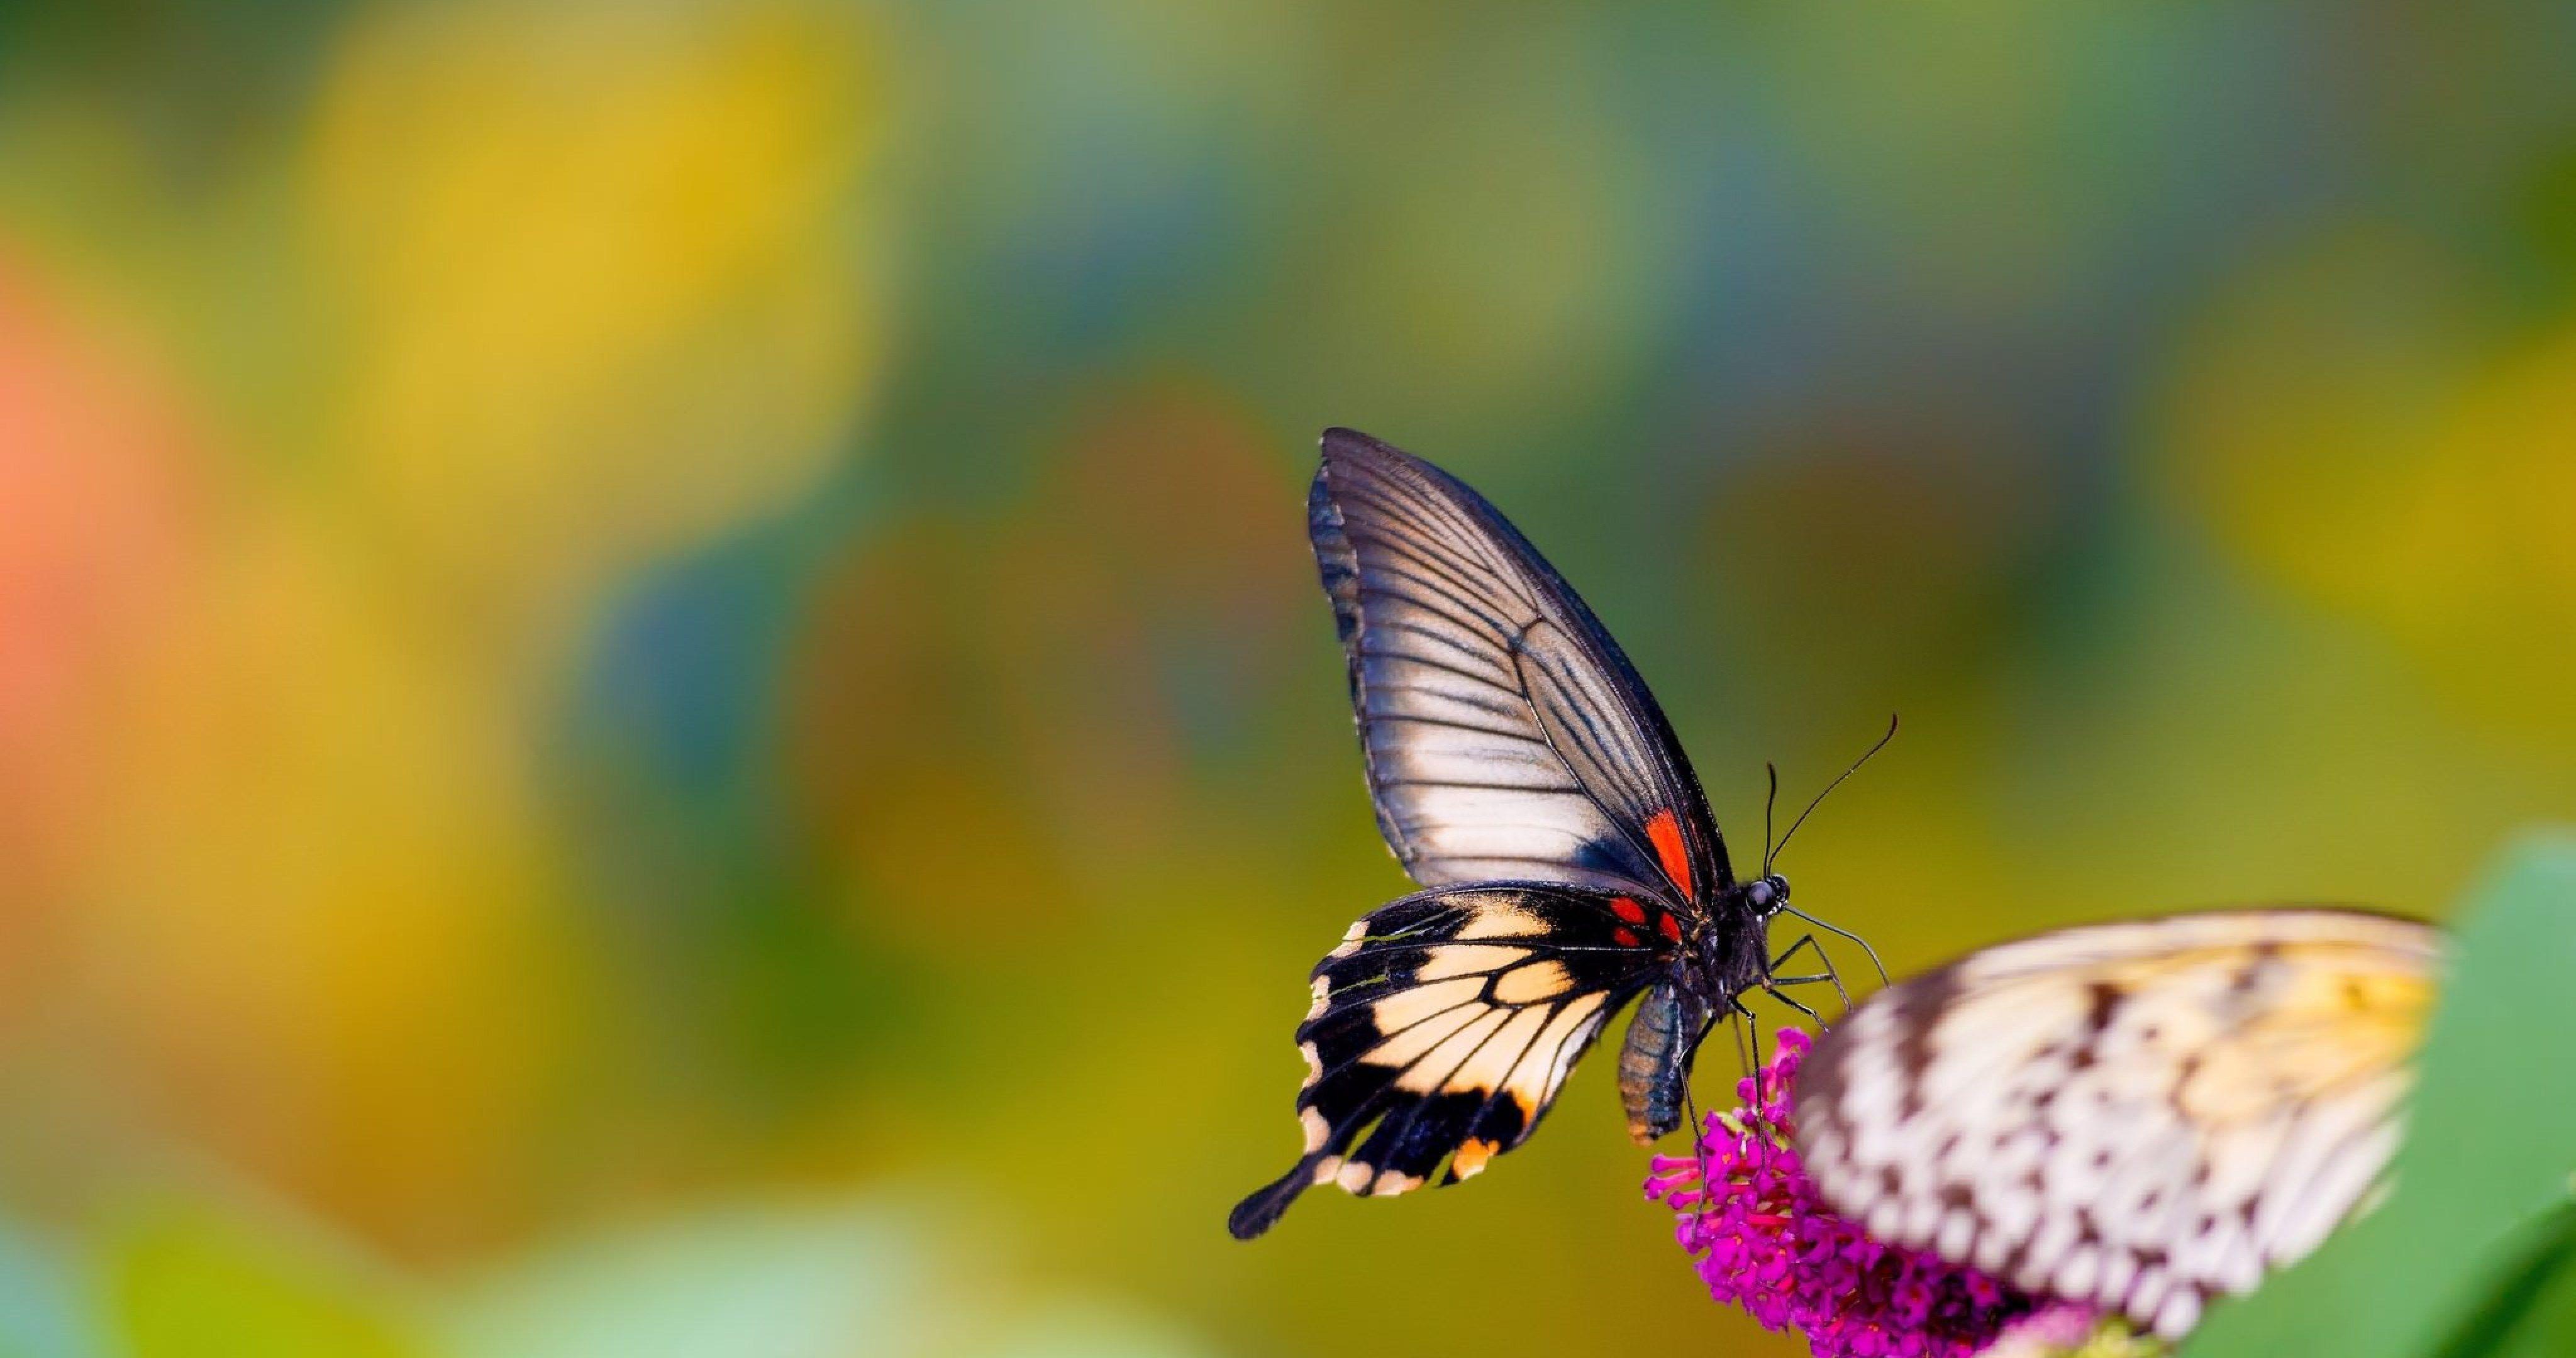 На цветок летит мотылек. Бабочка на цветке. Обои с бабочками. Бабочки в цветах. Яркие бабочки.